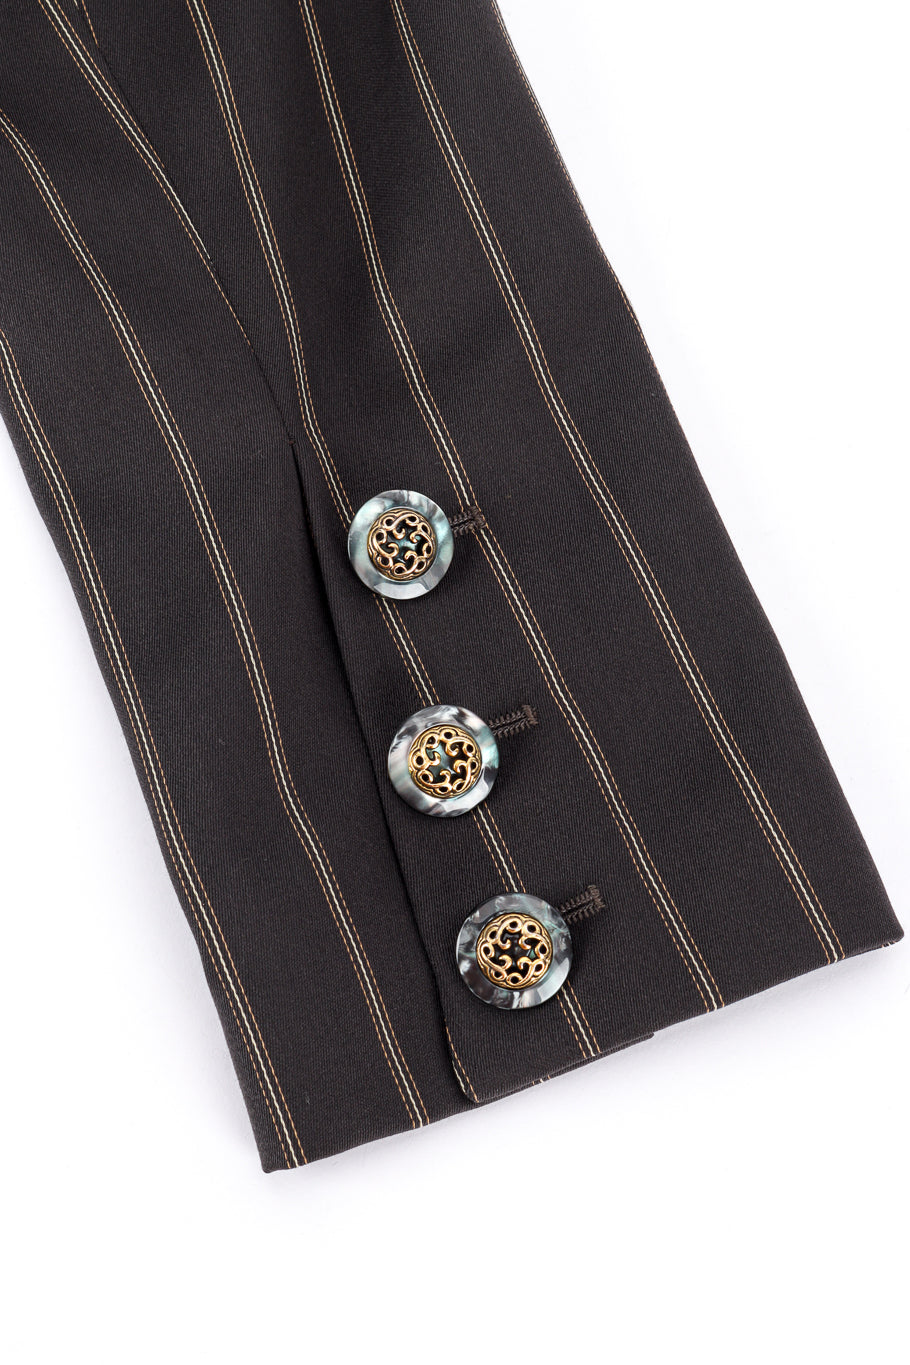 Vintage Byblos Cropped Pinstripe Jacket sleeve button closeup @recess la